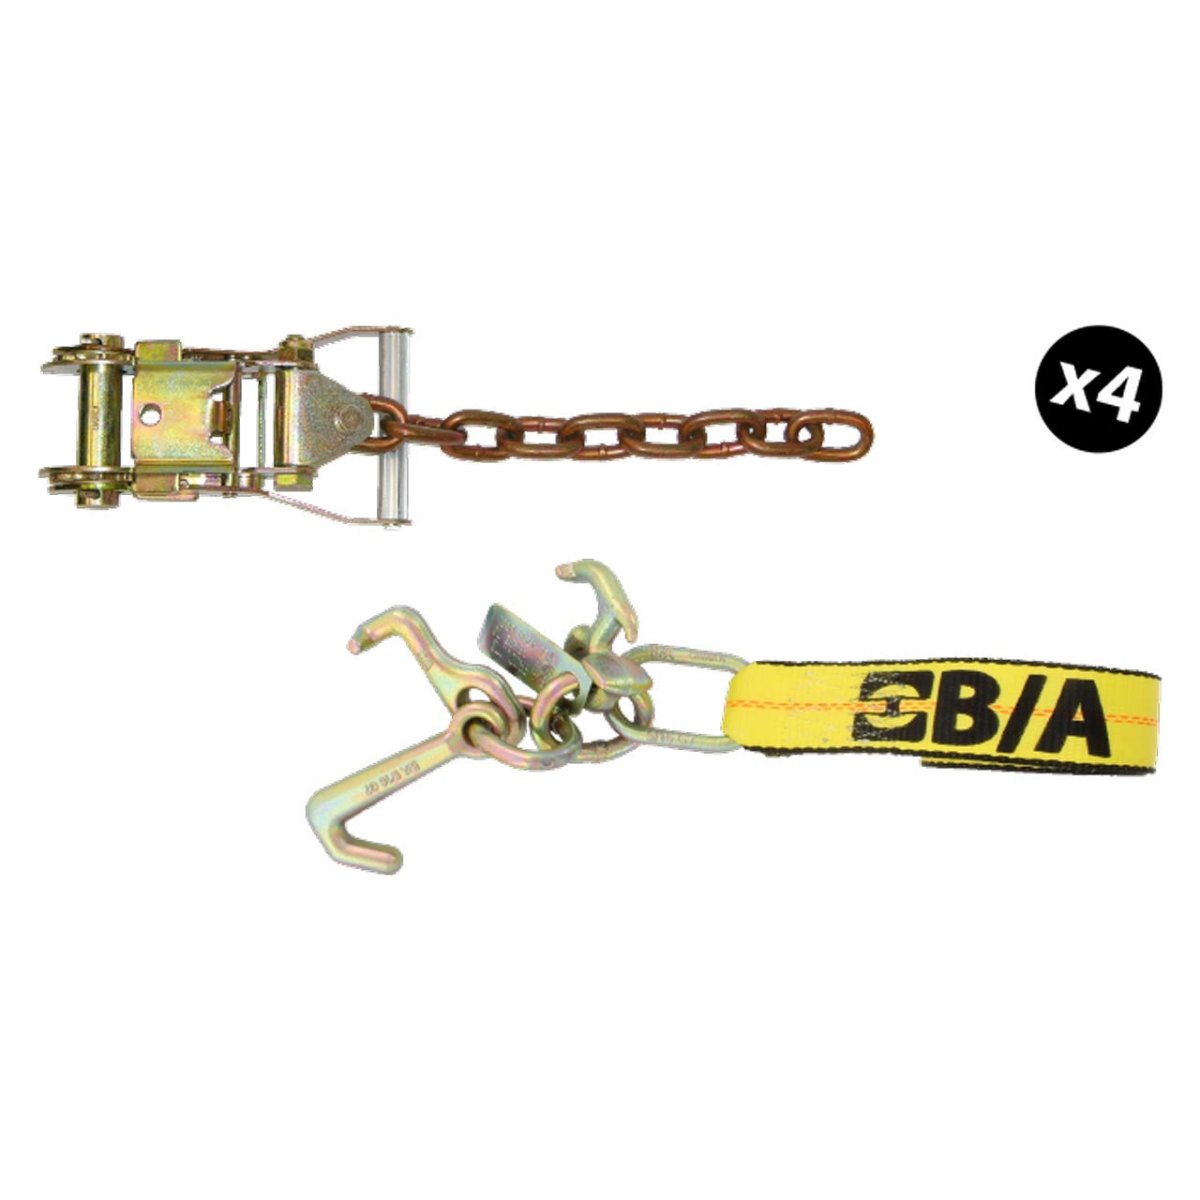 B/A Products Co. 2" x 8' Tie-Down Kit - 38-KIT100 - starequipmentsales